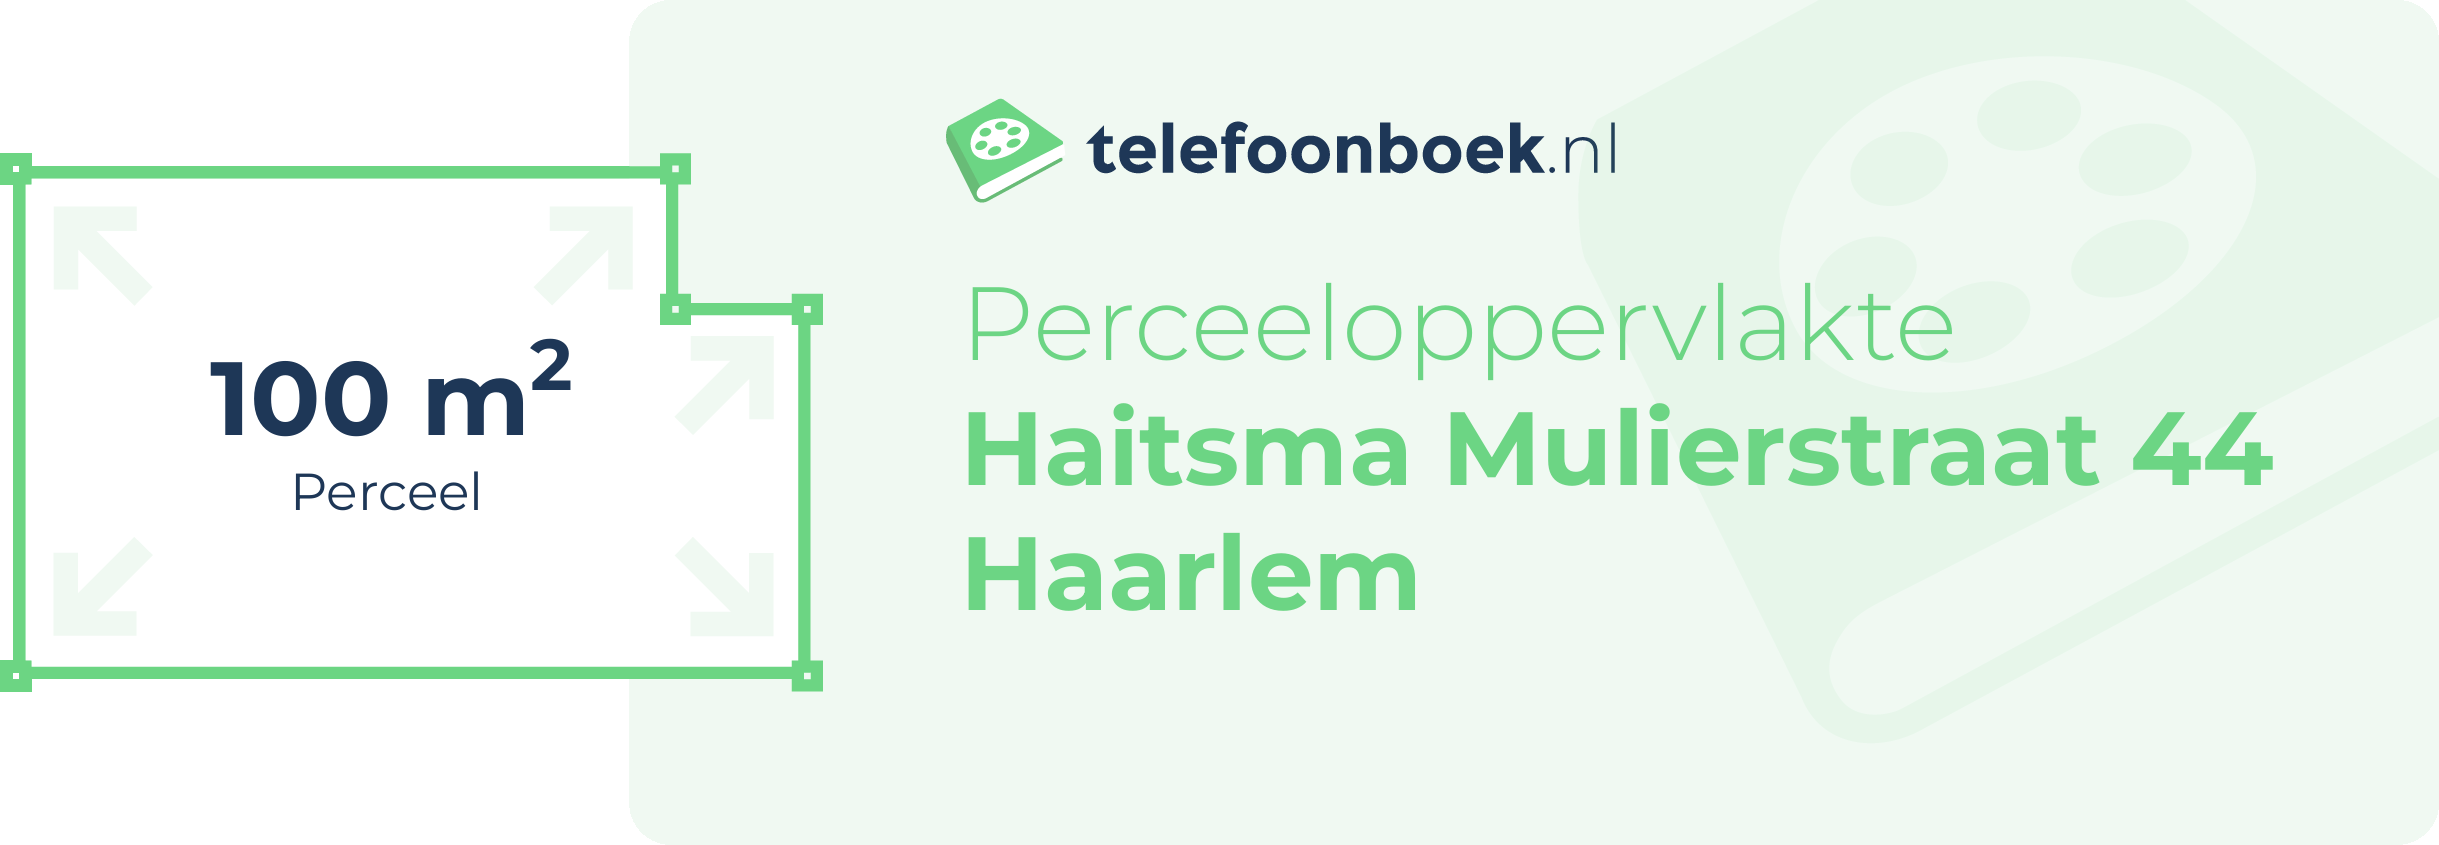 Perceeloppervlakte Haitsma Mulierstraat 44 Haarlem